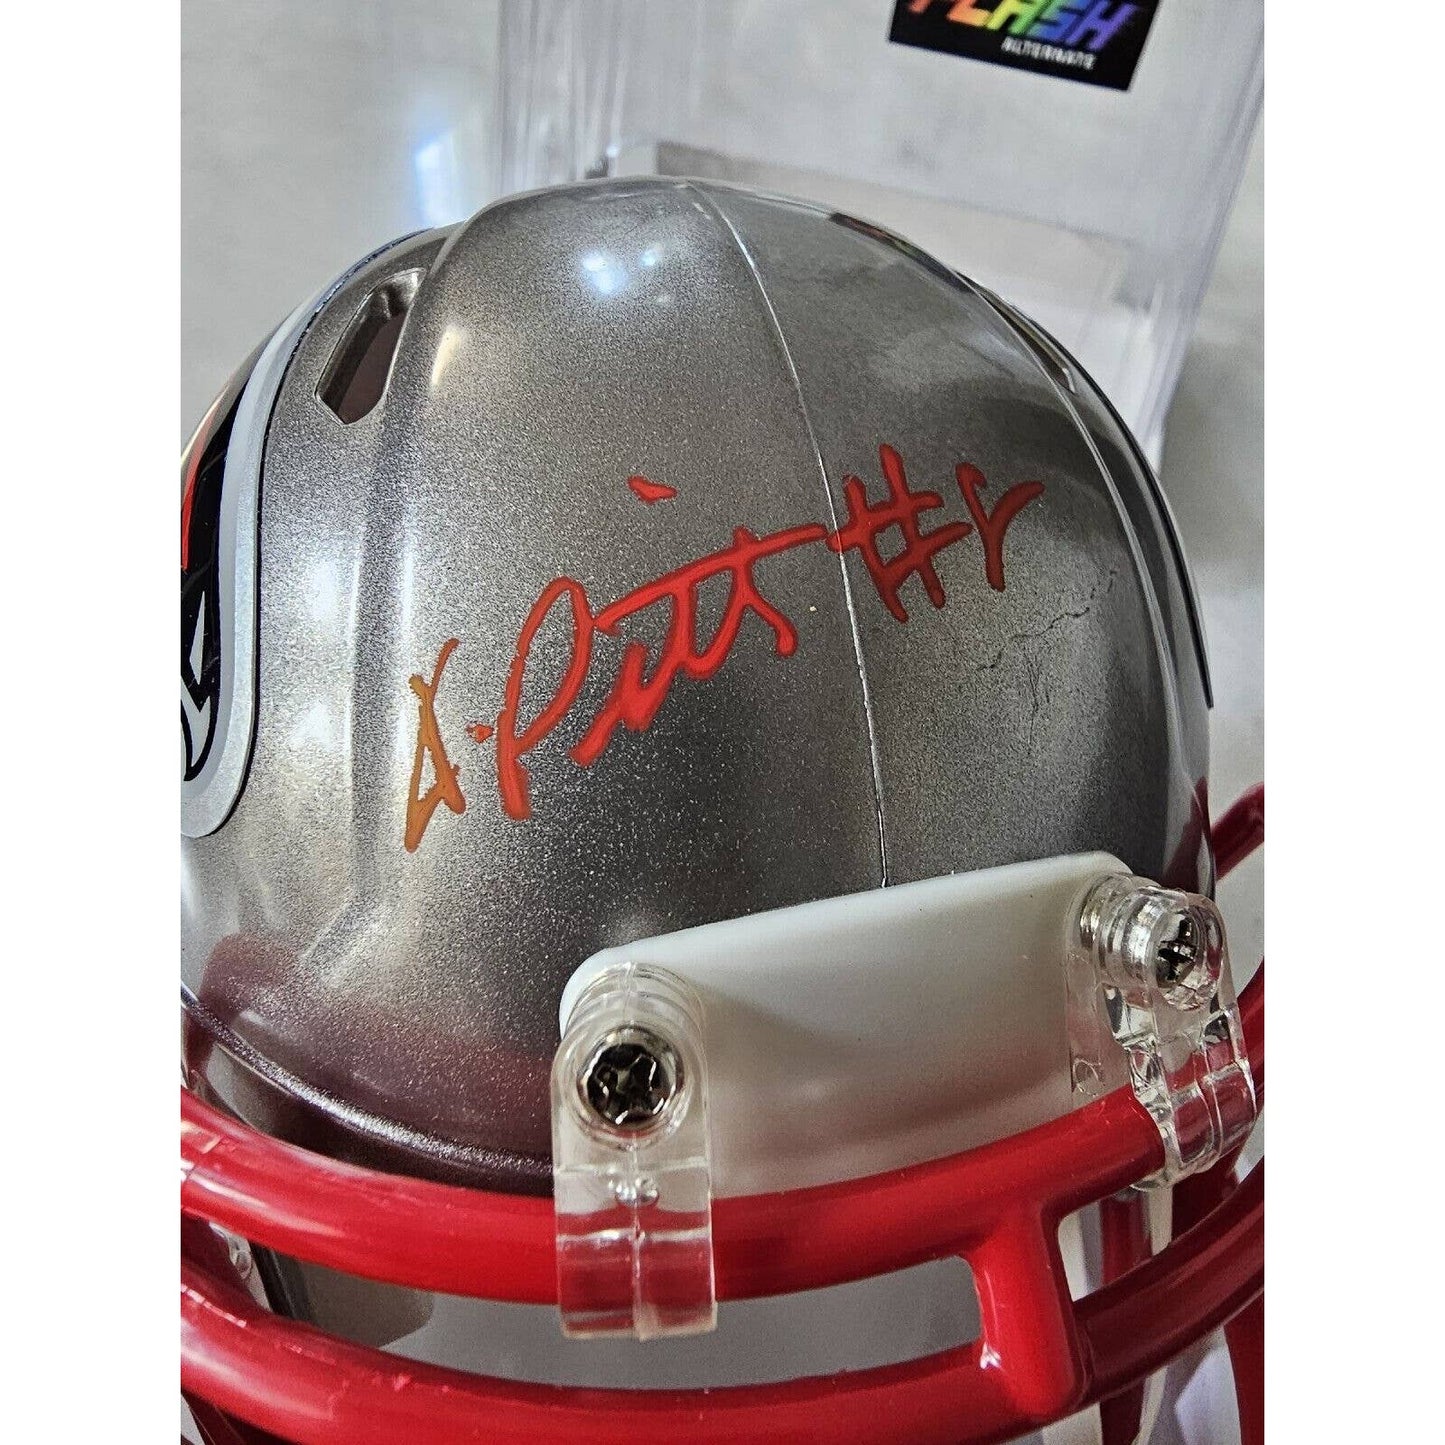 Kyle Pitts Autographed/Signed Mini Helmet Beckett Atlanta Falcons Flash